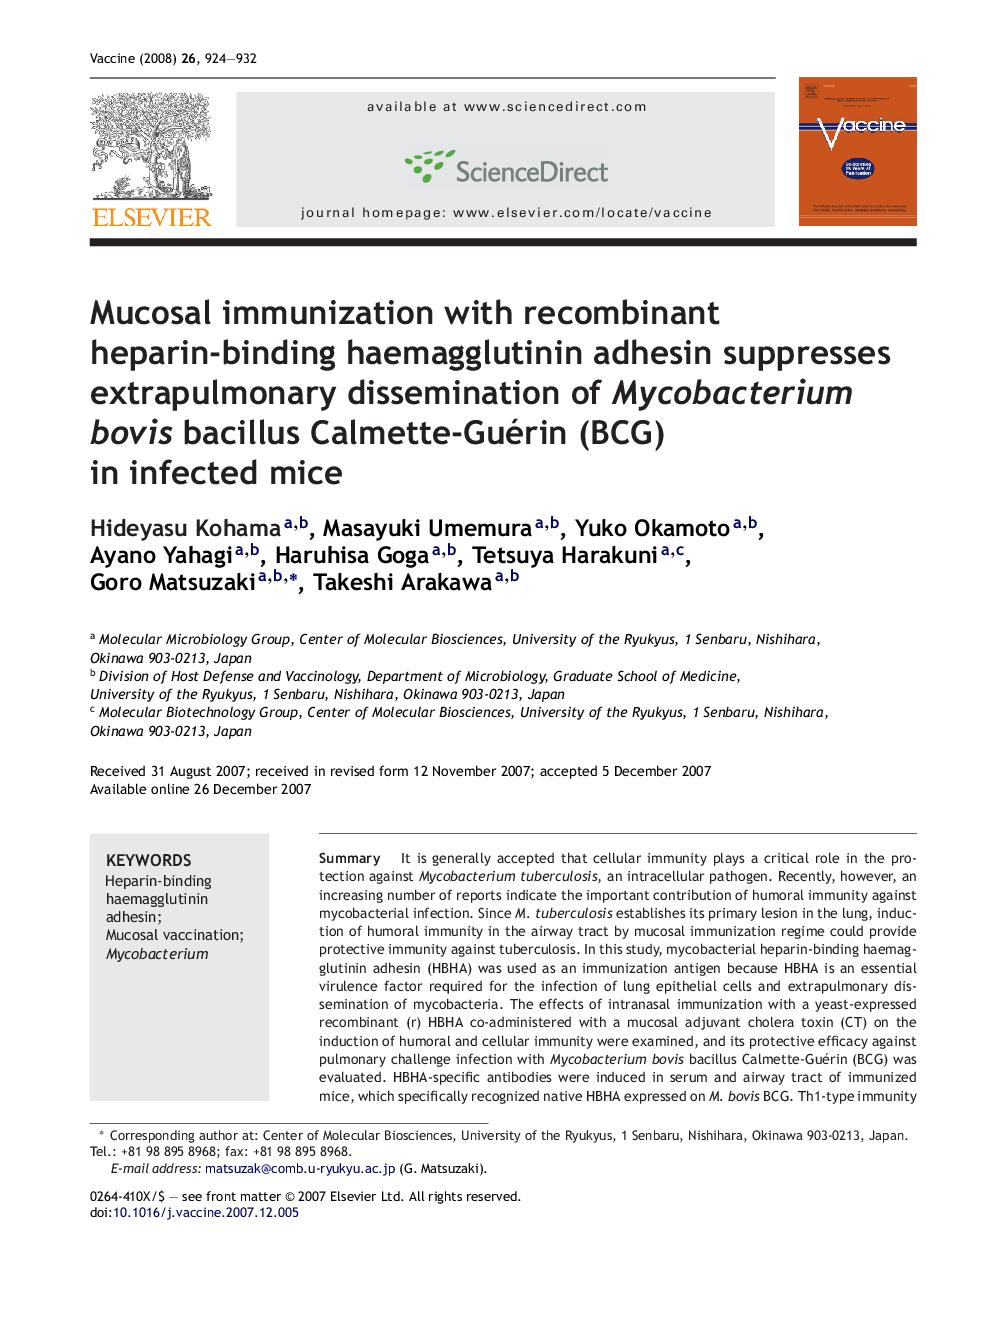 Mucosal immunization with recombinant heparin-binding haemagglutinin adhesin suppresses extrapulmonary dissemination of Mycobacterium bovis bacillus Calmette-Guérin (BCG) in infected mice